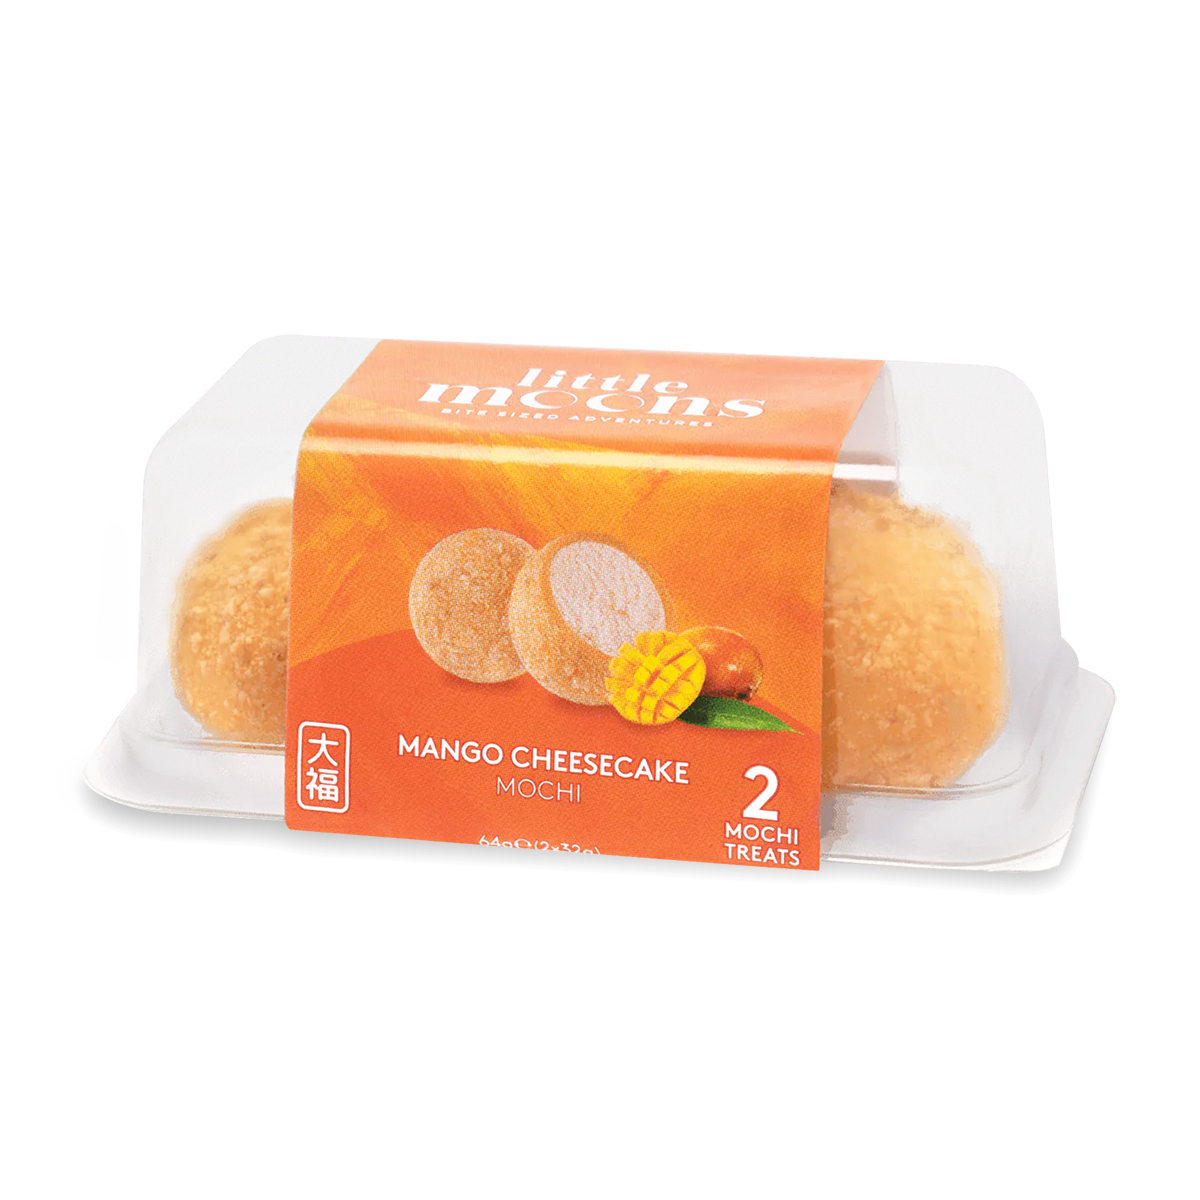 Exclusiv in magazine - Mango Cheesecake Mochi LITTLE MOONS 64g, asianfood.ro